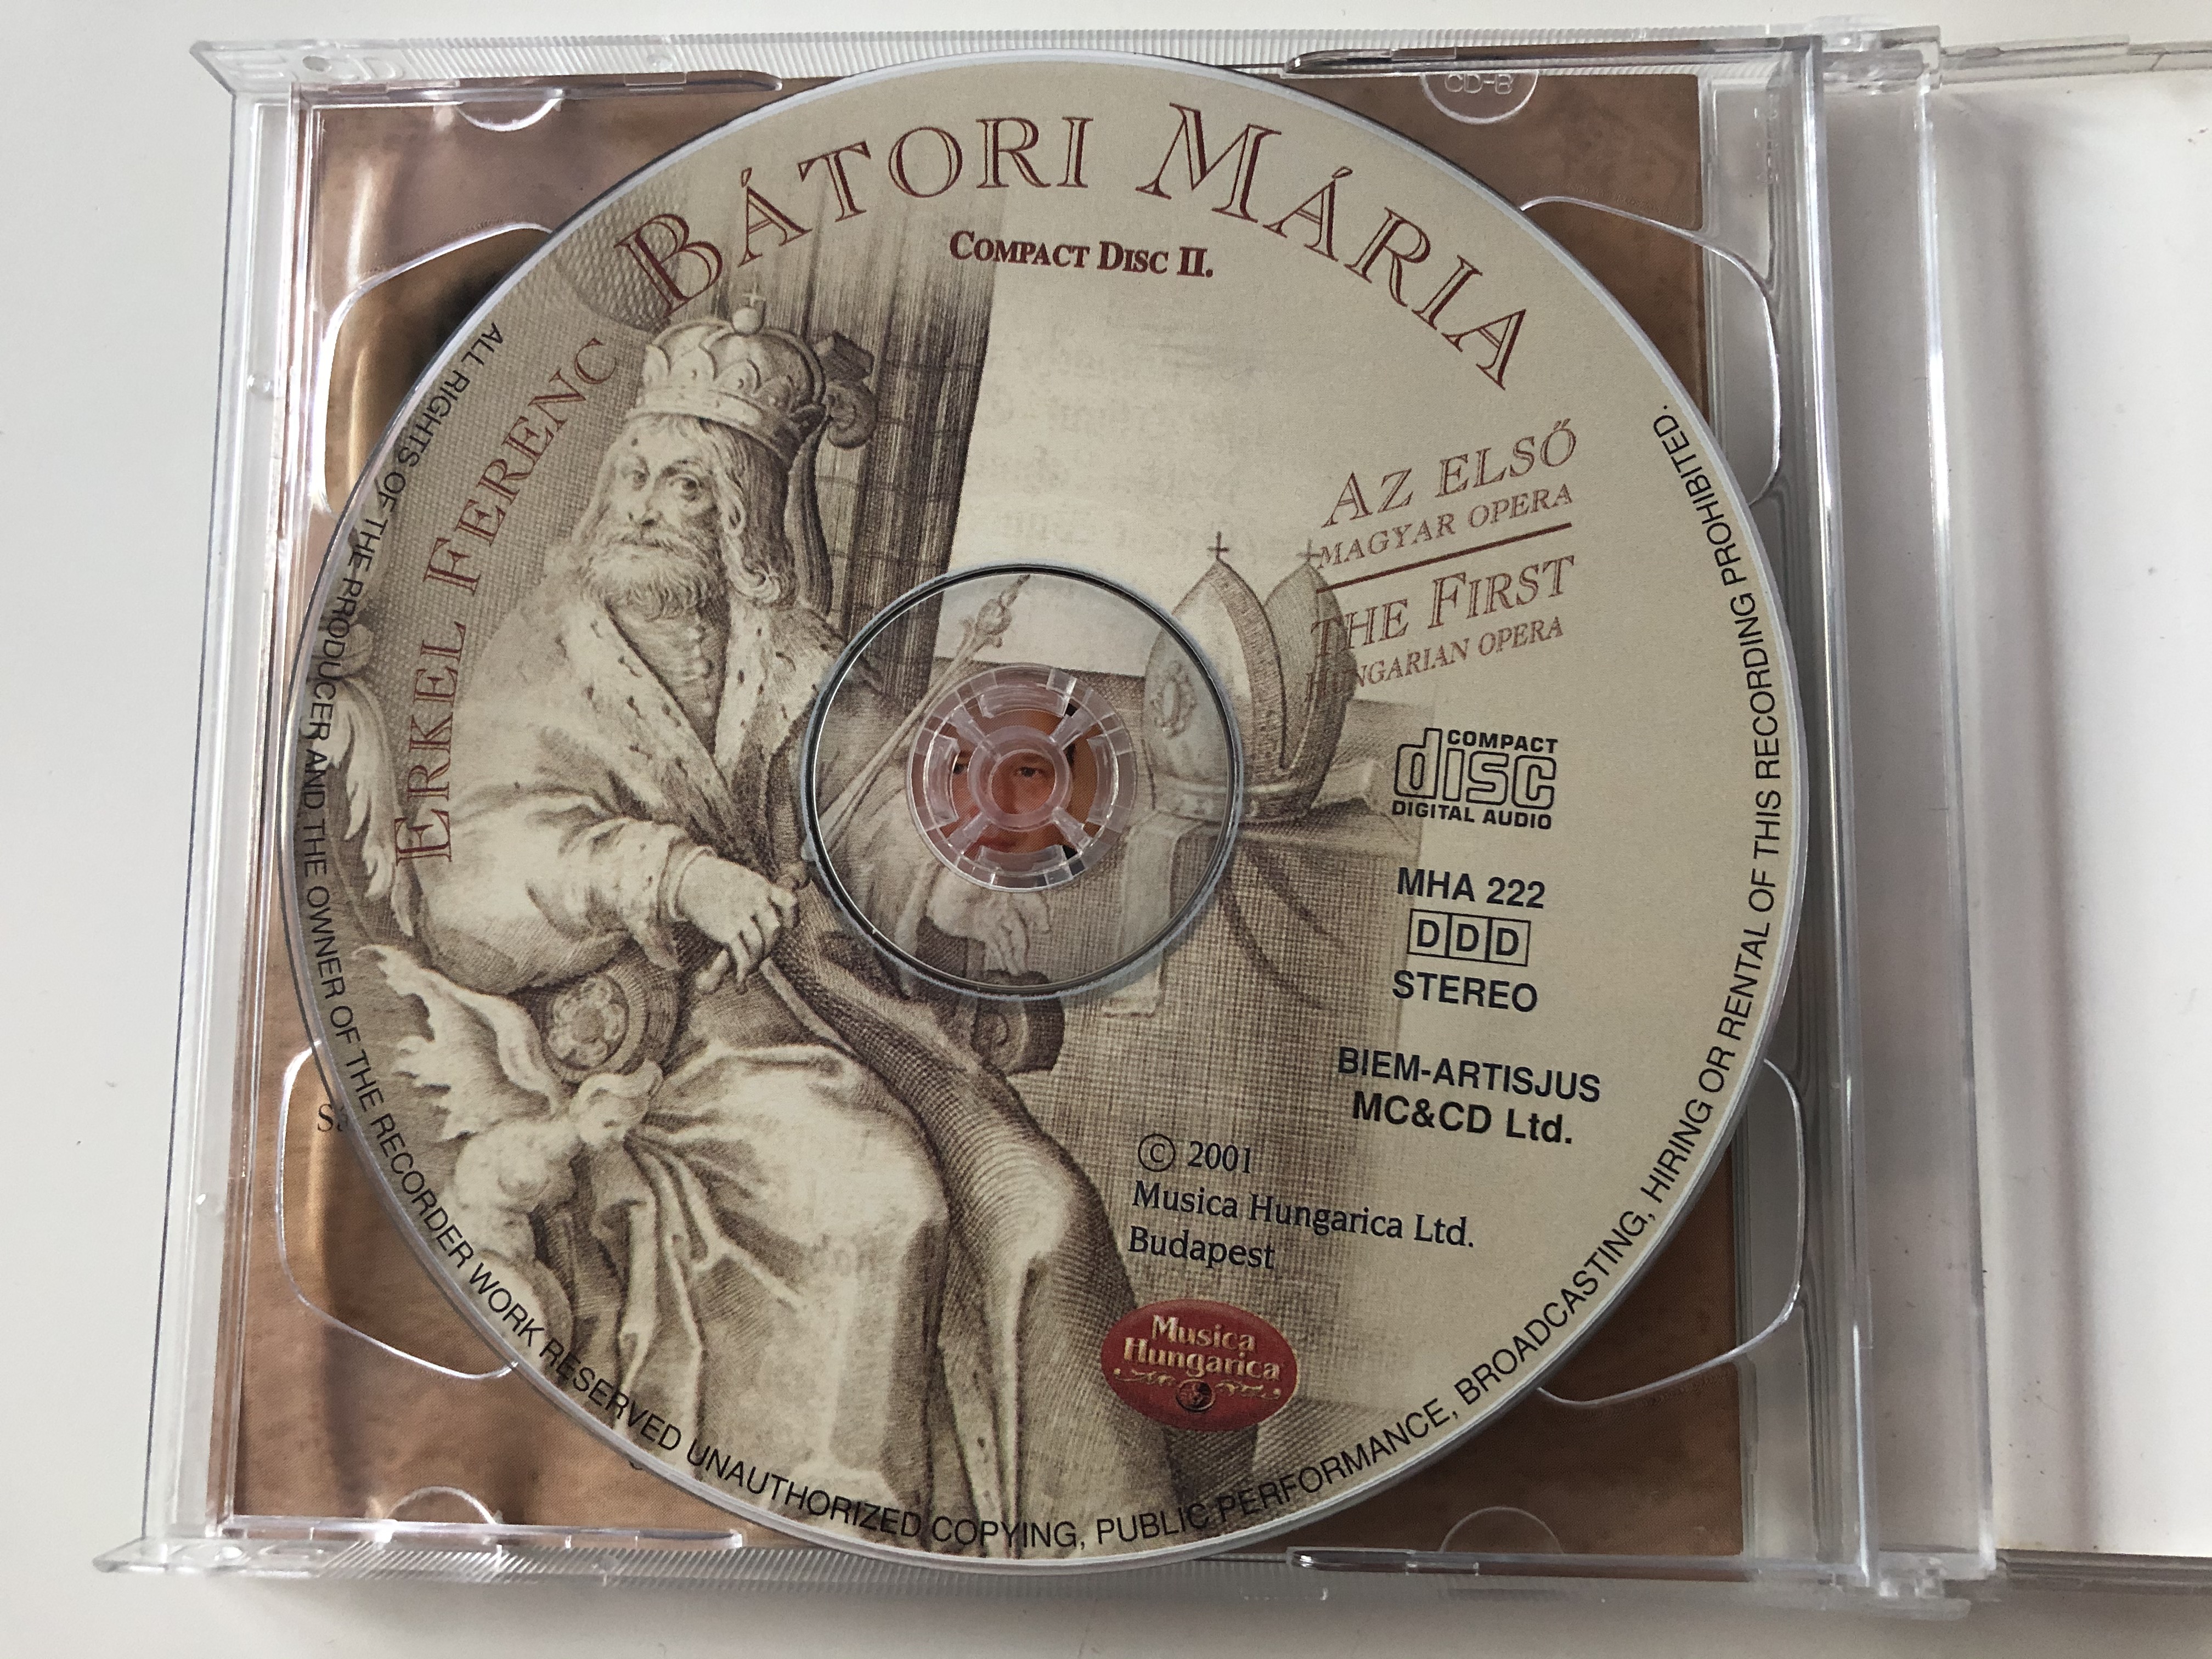 batori-maria-opera-az-elso-magyar-opera-the-first-hungarian-opera-erkel-ferenc-musica-hungarica-ltd.-budapest-2x-audio-cd-2001-stereo-mha-222-5-.jpg